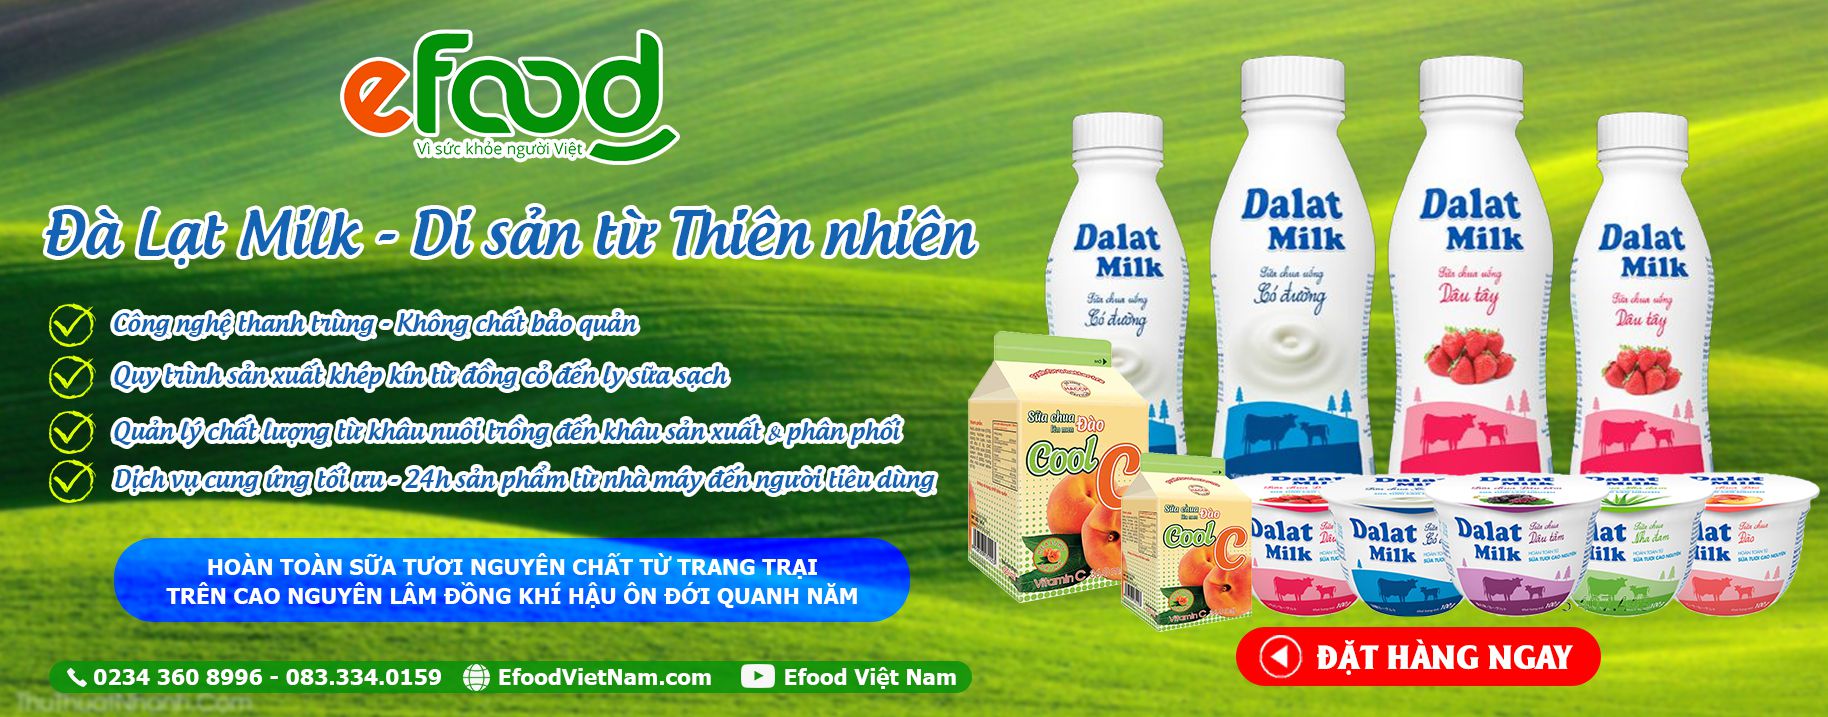 banner dalat milk